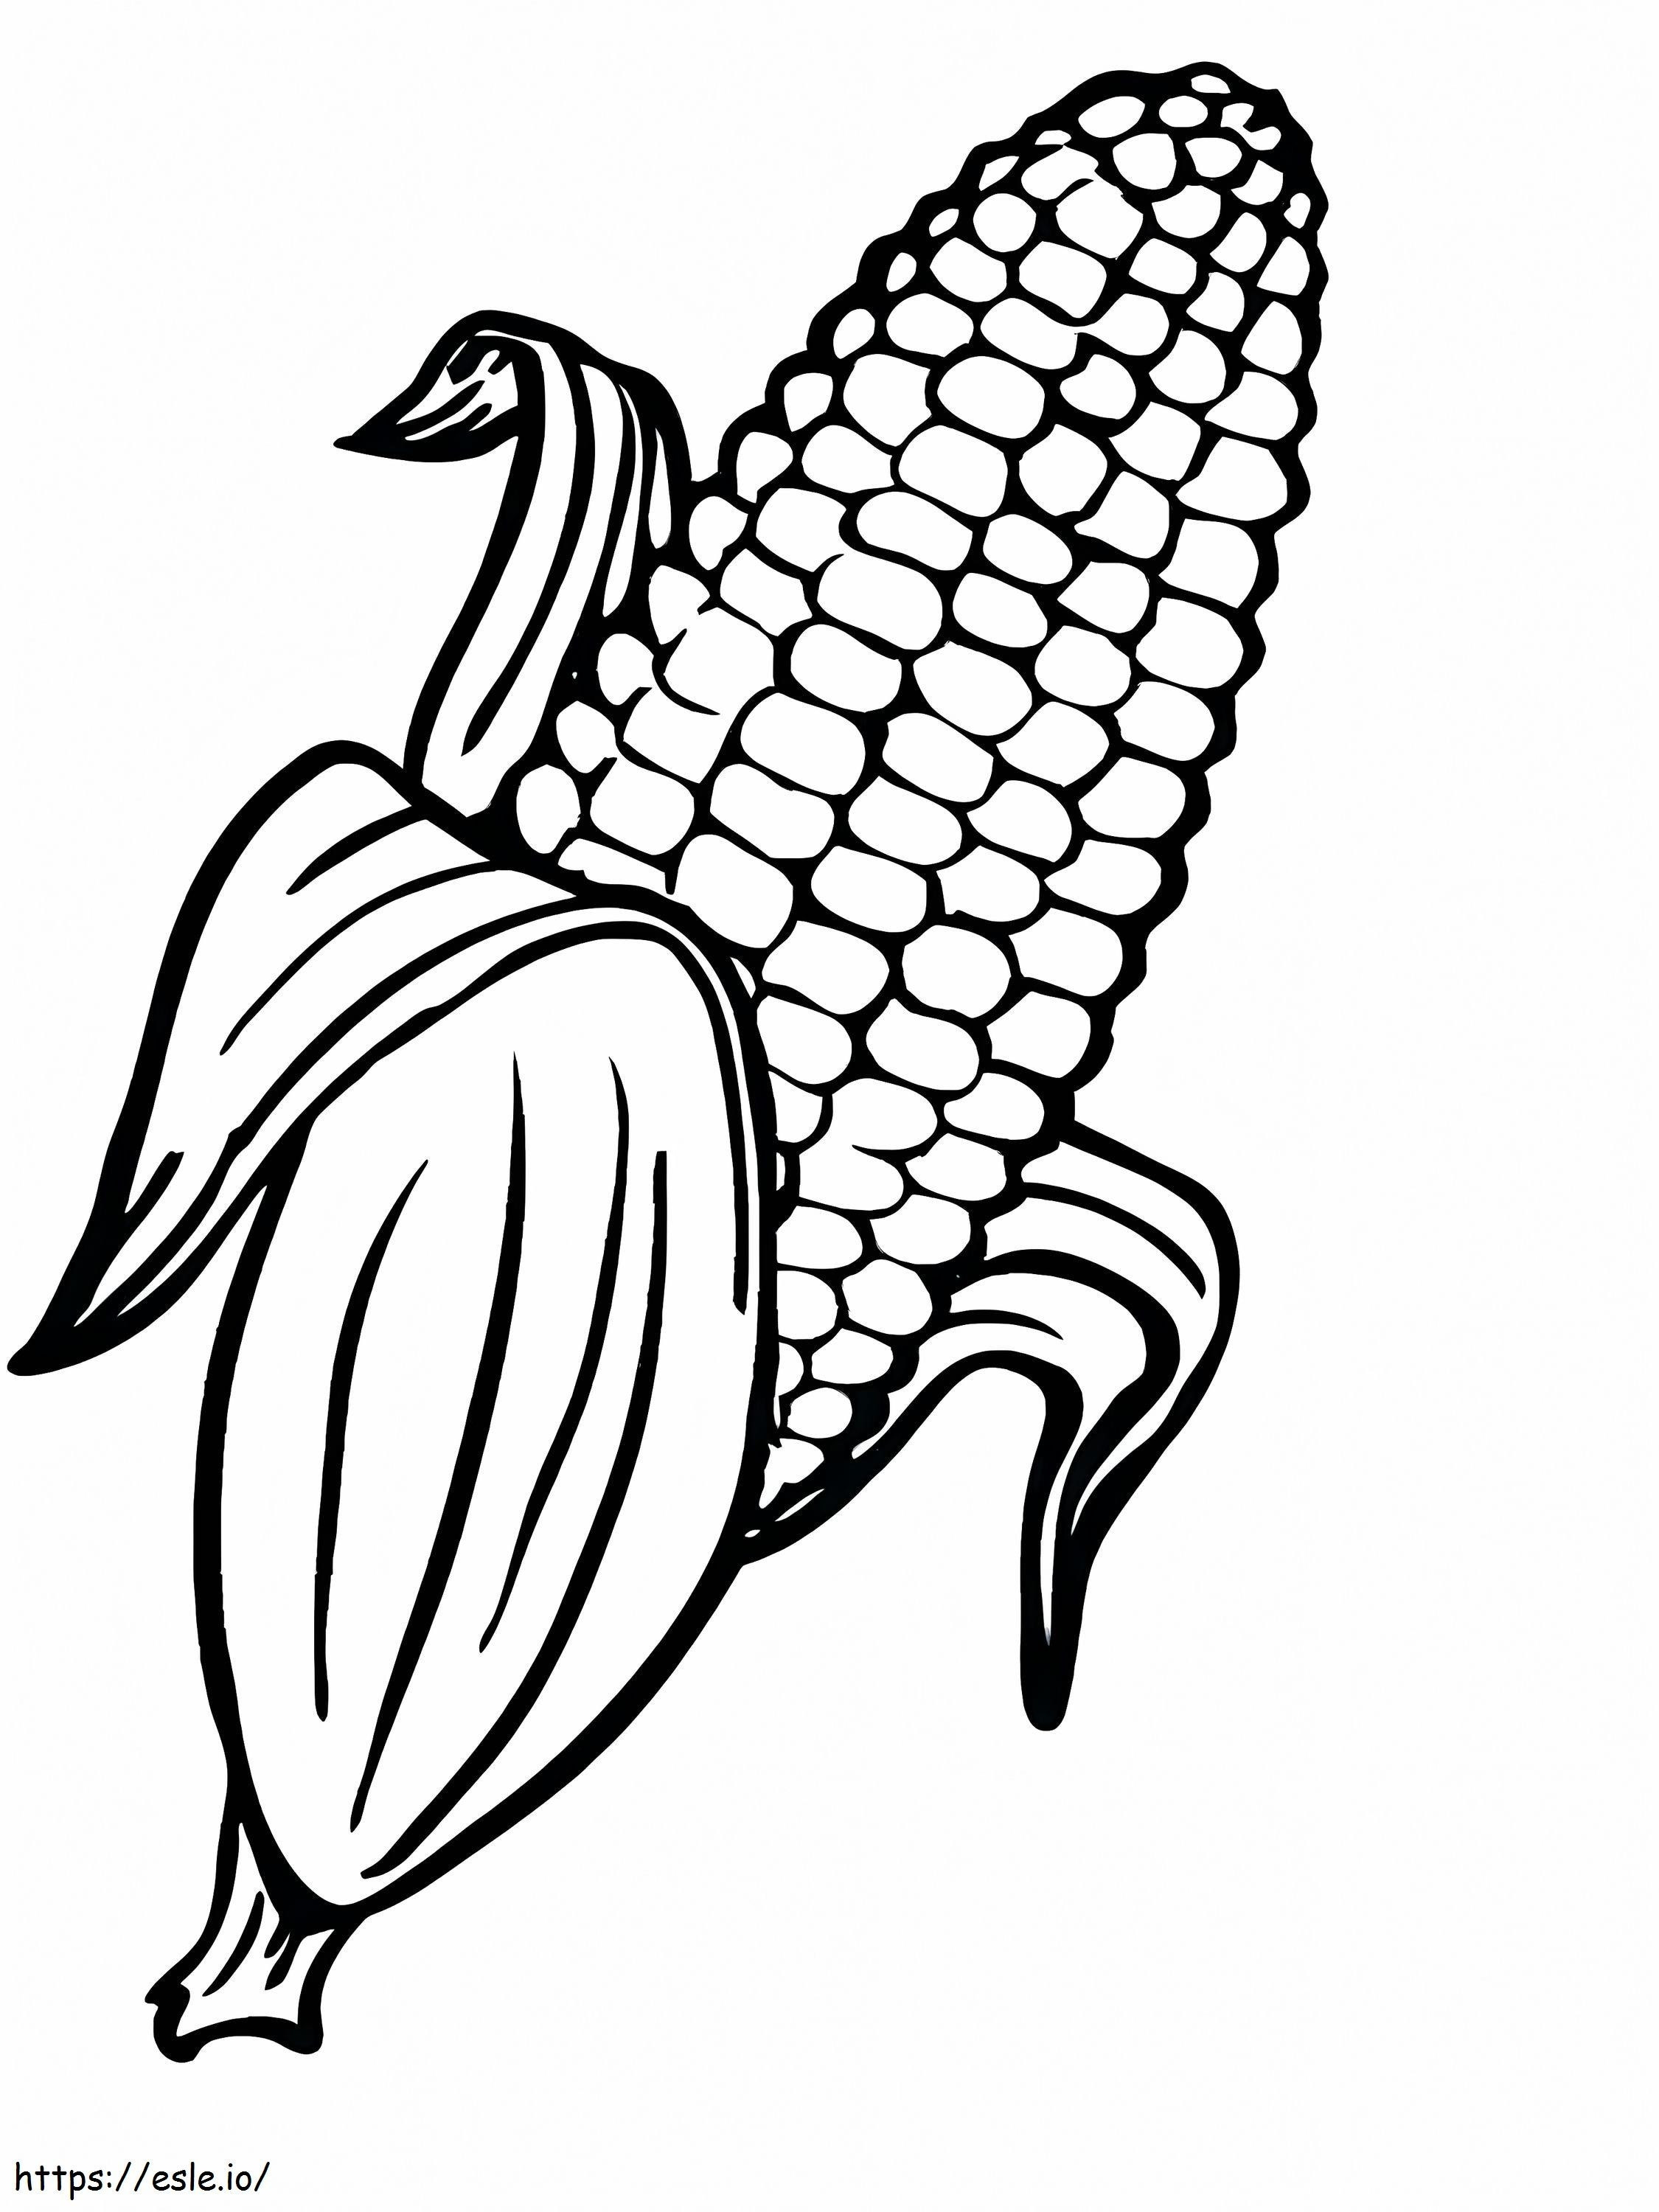 maíz simple para colorear